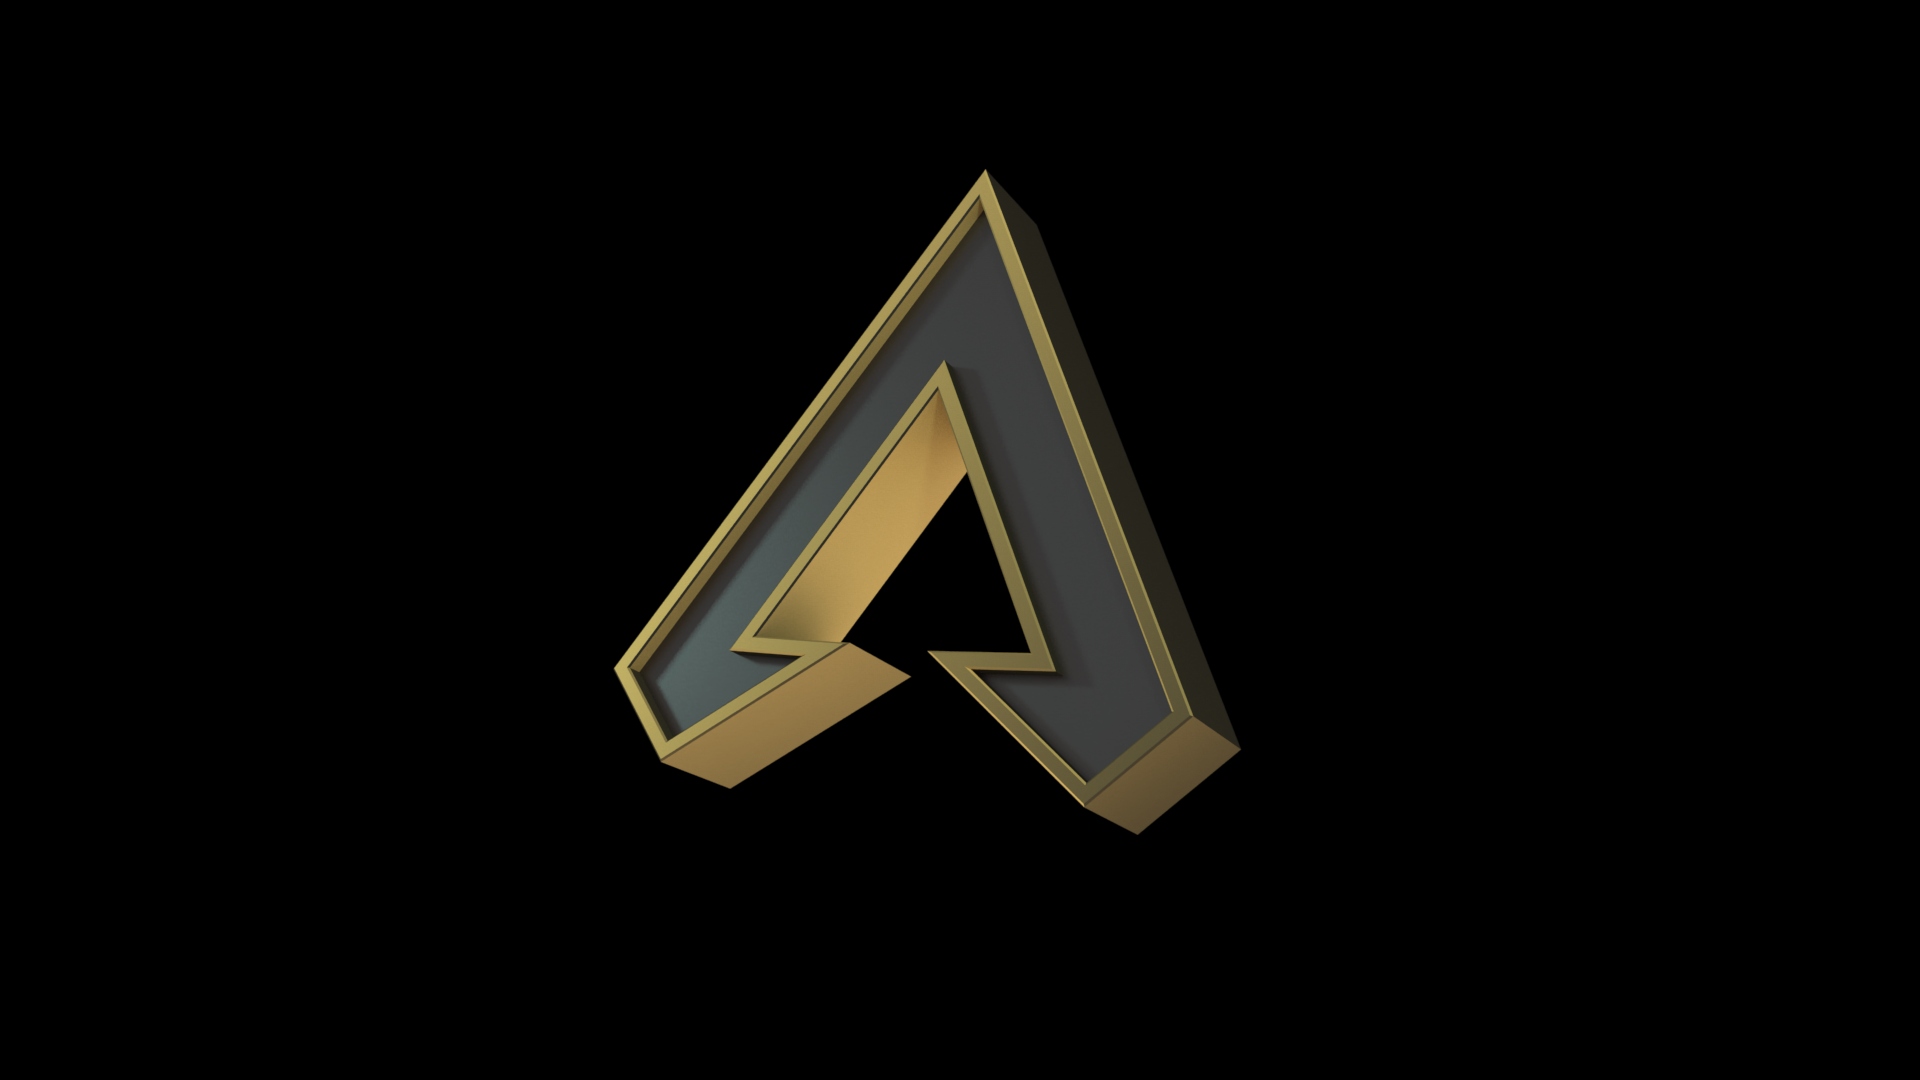 Apex Legends Symbol PNG Transparent & SVG Vector - Freebie Supply